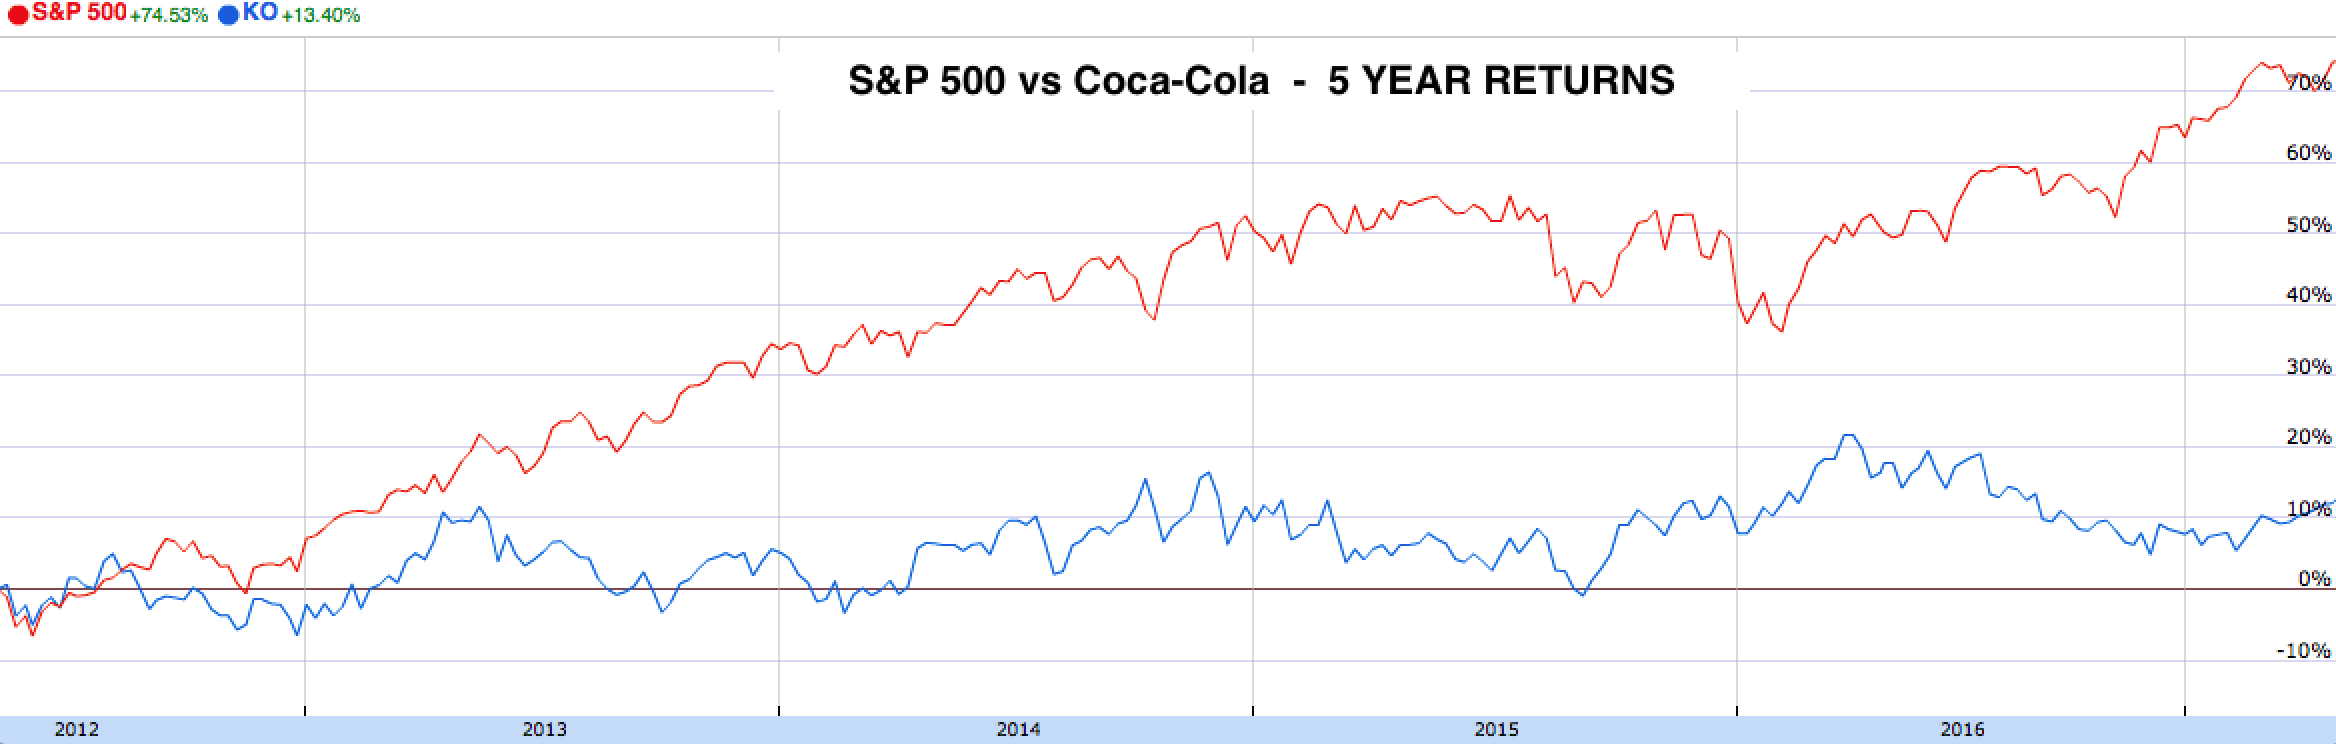 S&P 500 vs Coca Cola 5 Year Returns